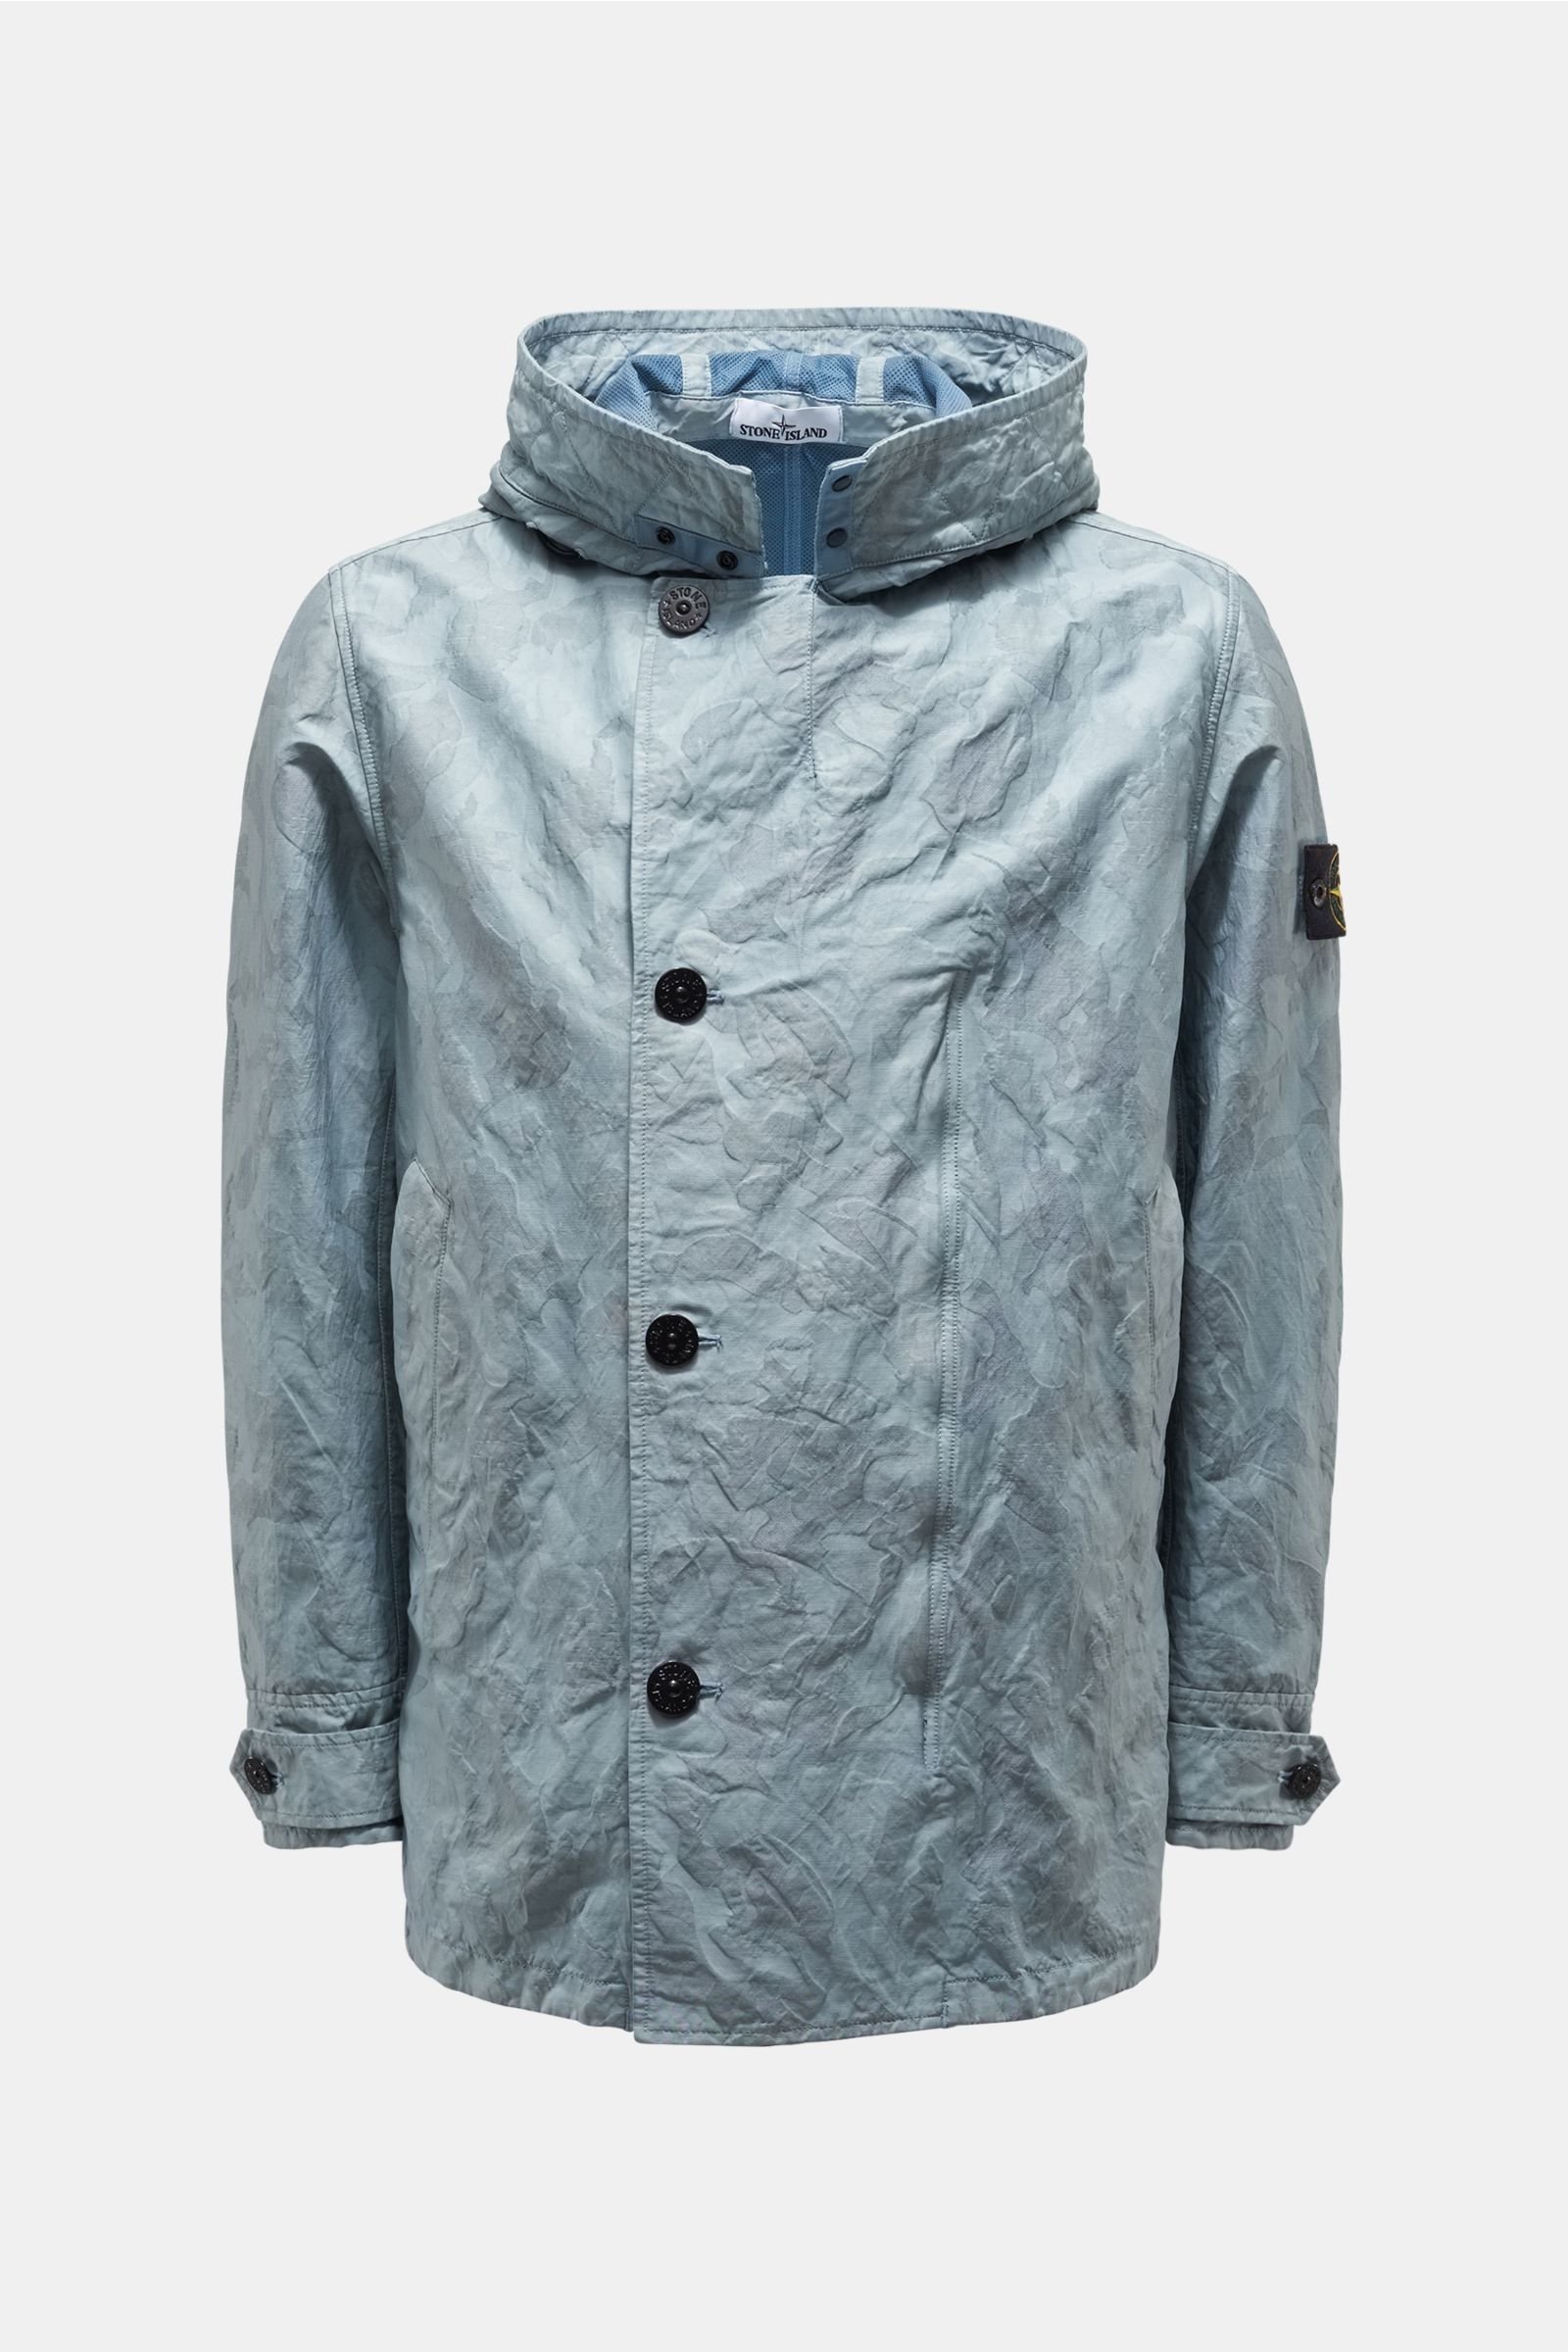 Jacket 'Big Loom Camo-TC' grey-blue patterned